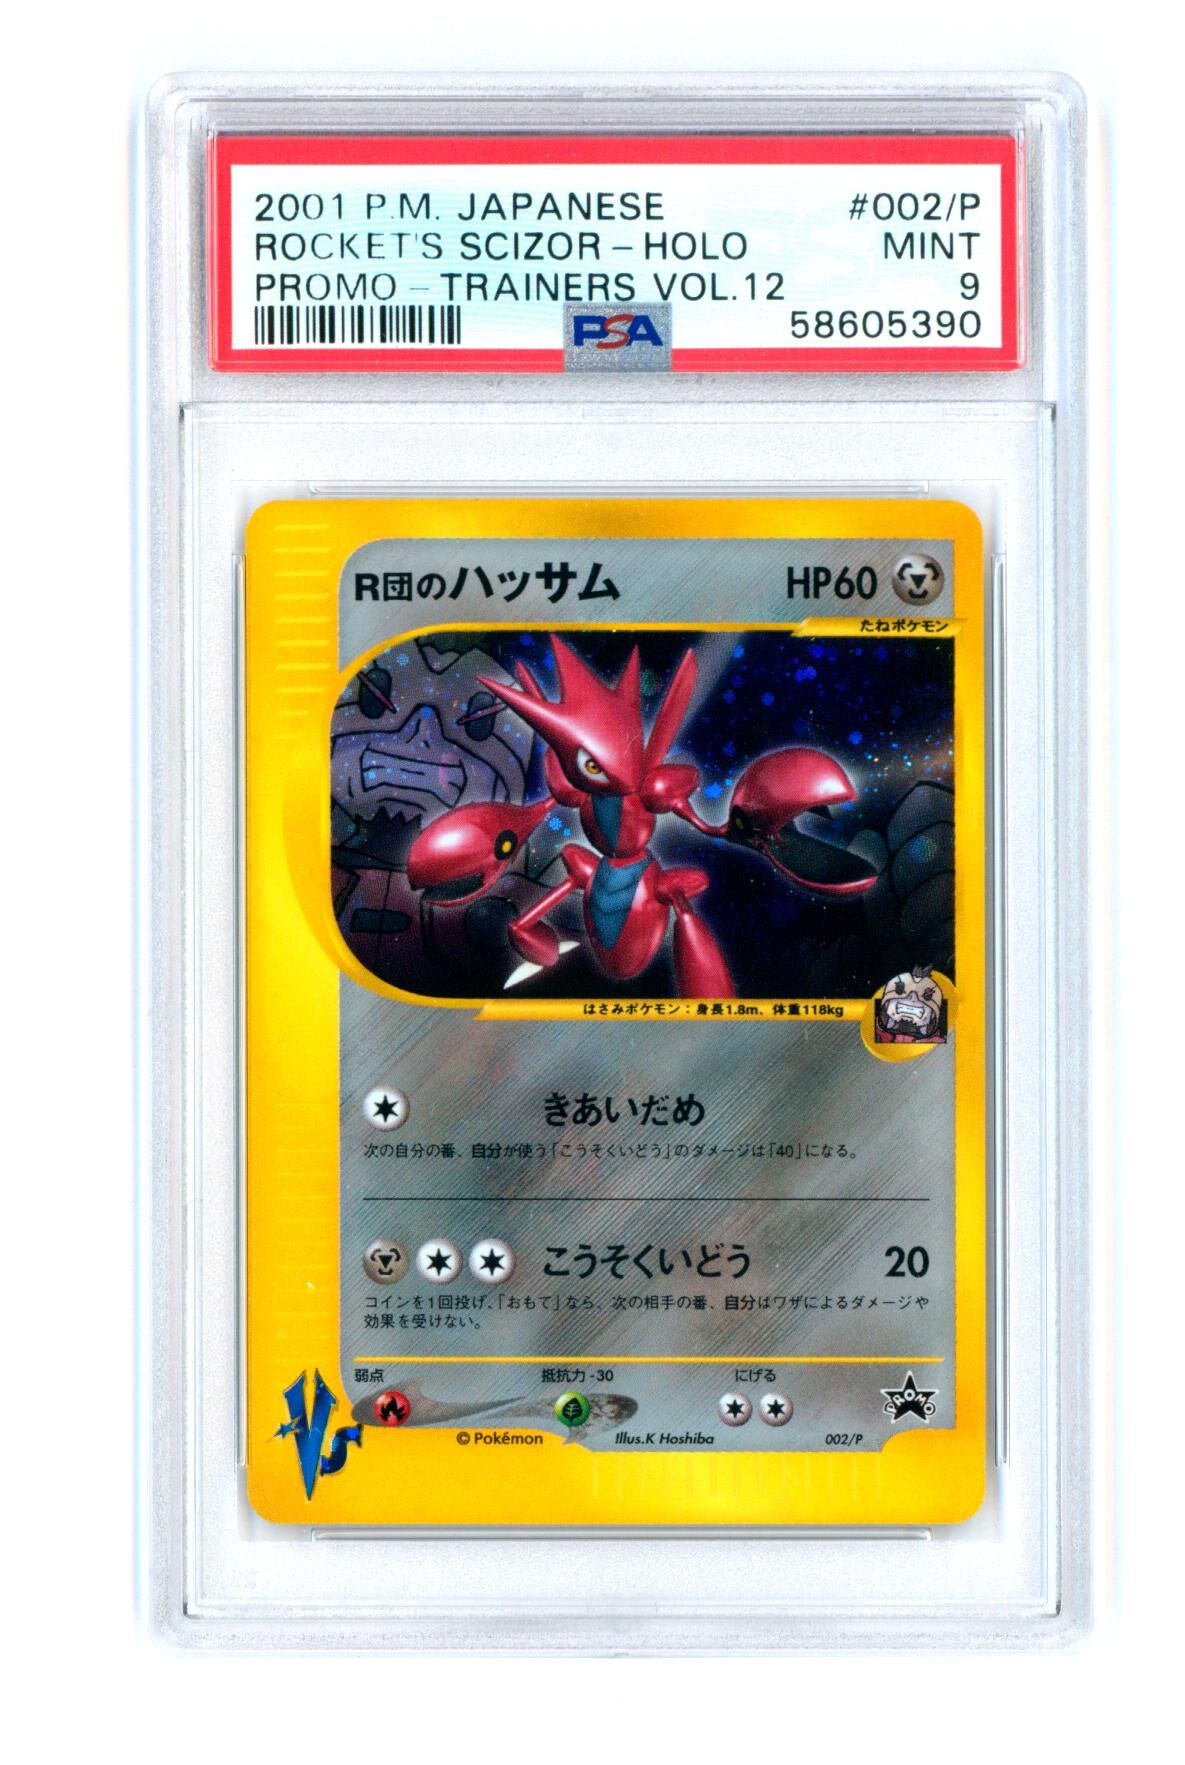 Rocket's Scizor 002/P - Japanese VS Trainers Vol. 12 Promo - Holo - PSA 9 MINT​ - Pokémon